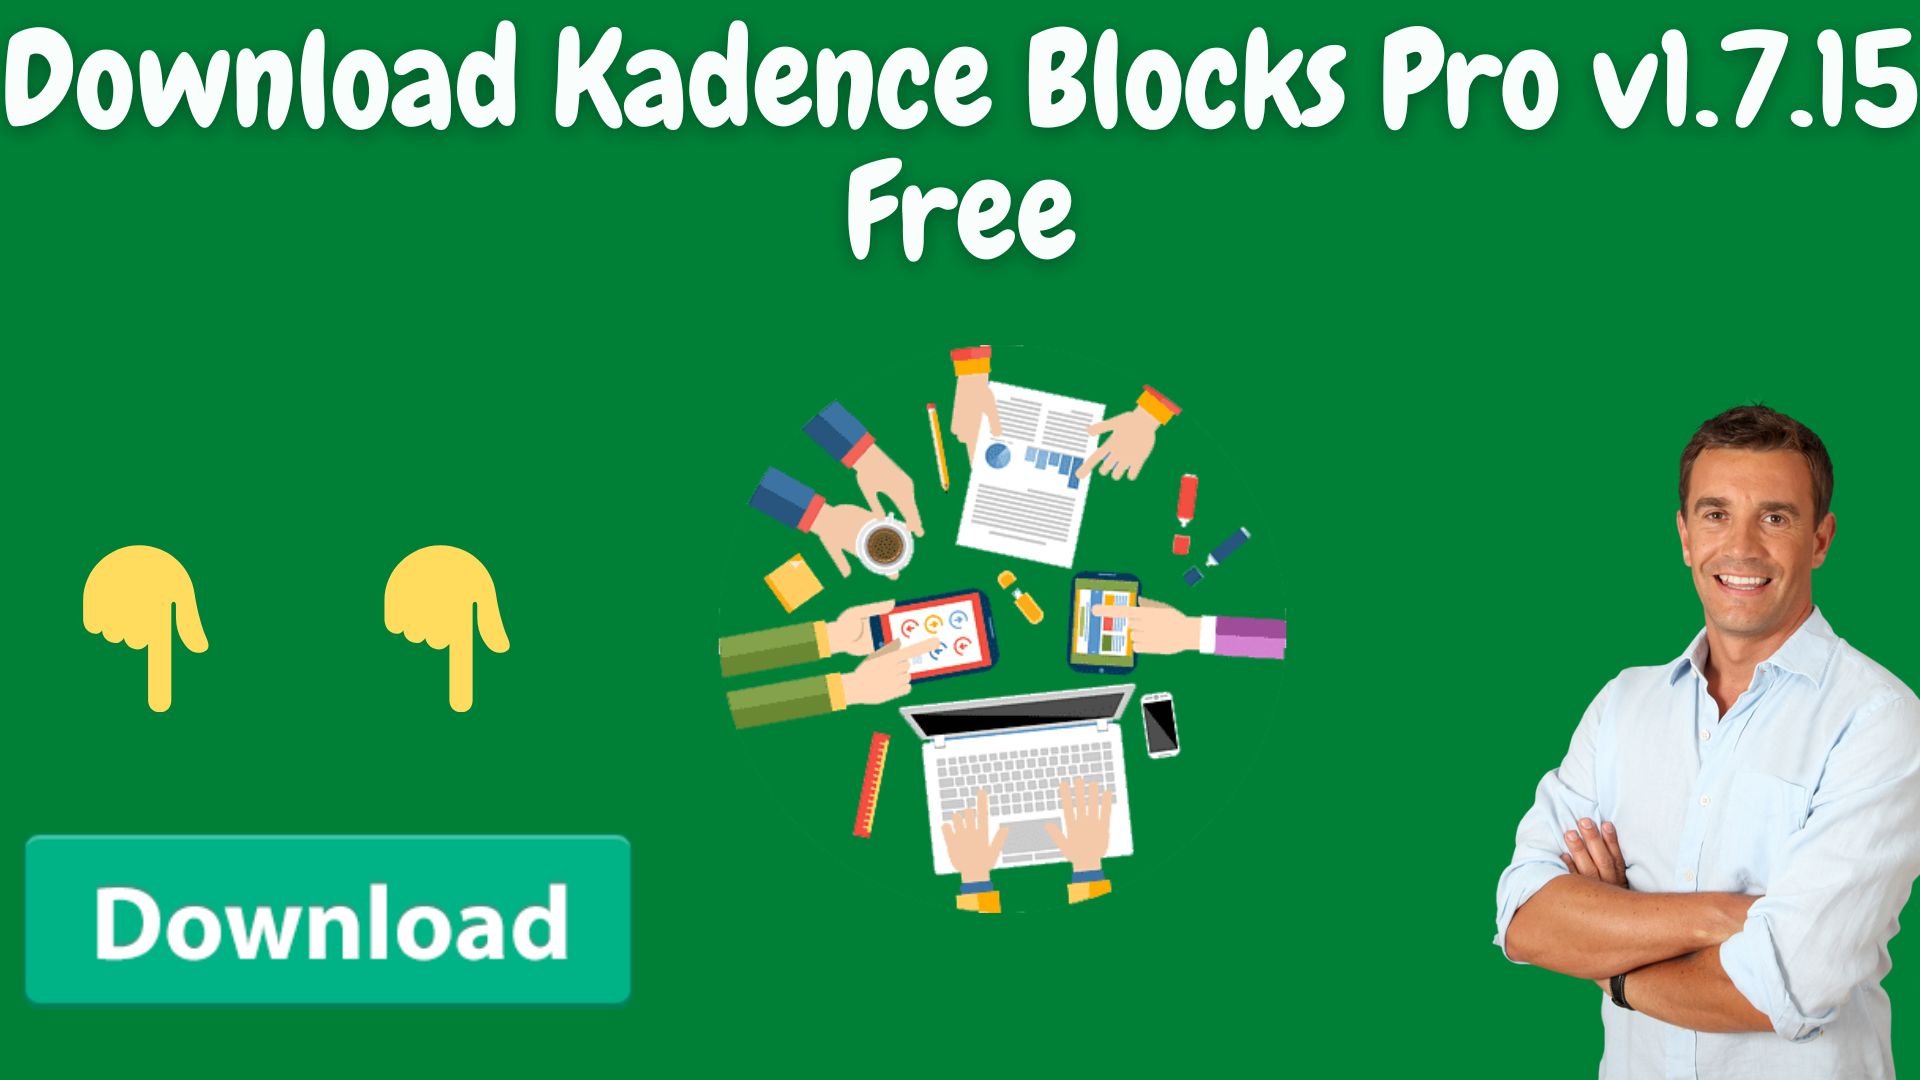 Download kadence blocks pro v1. 7. 15 free